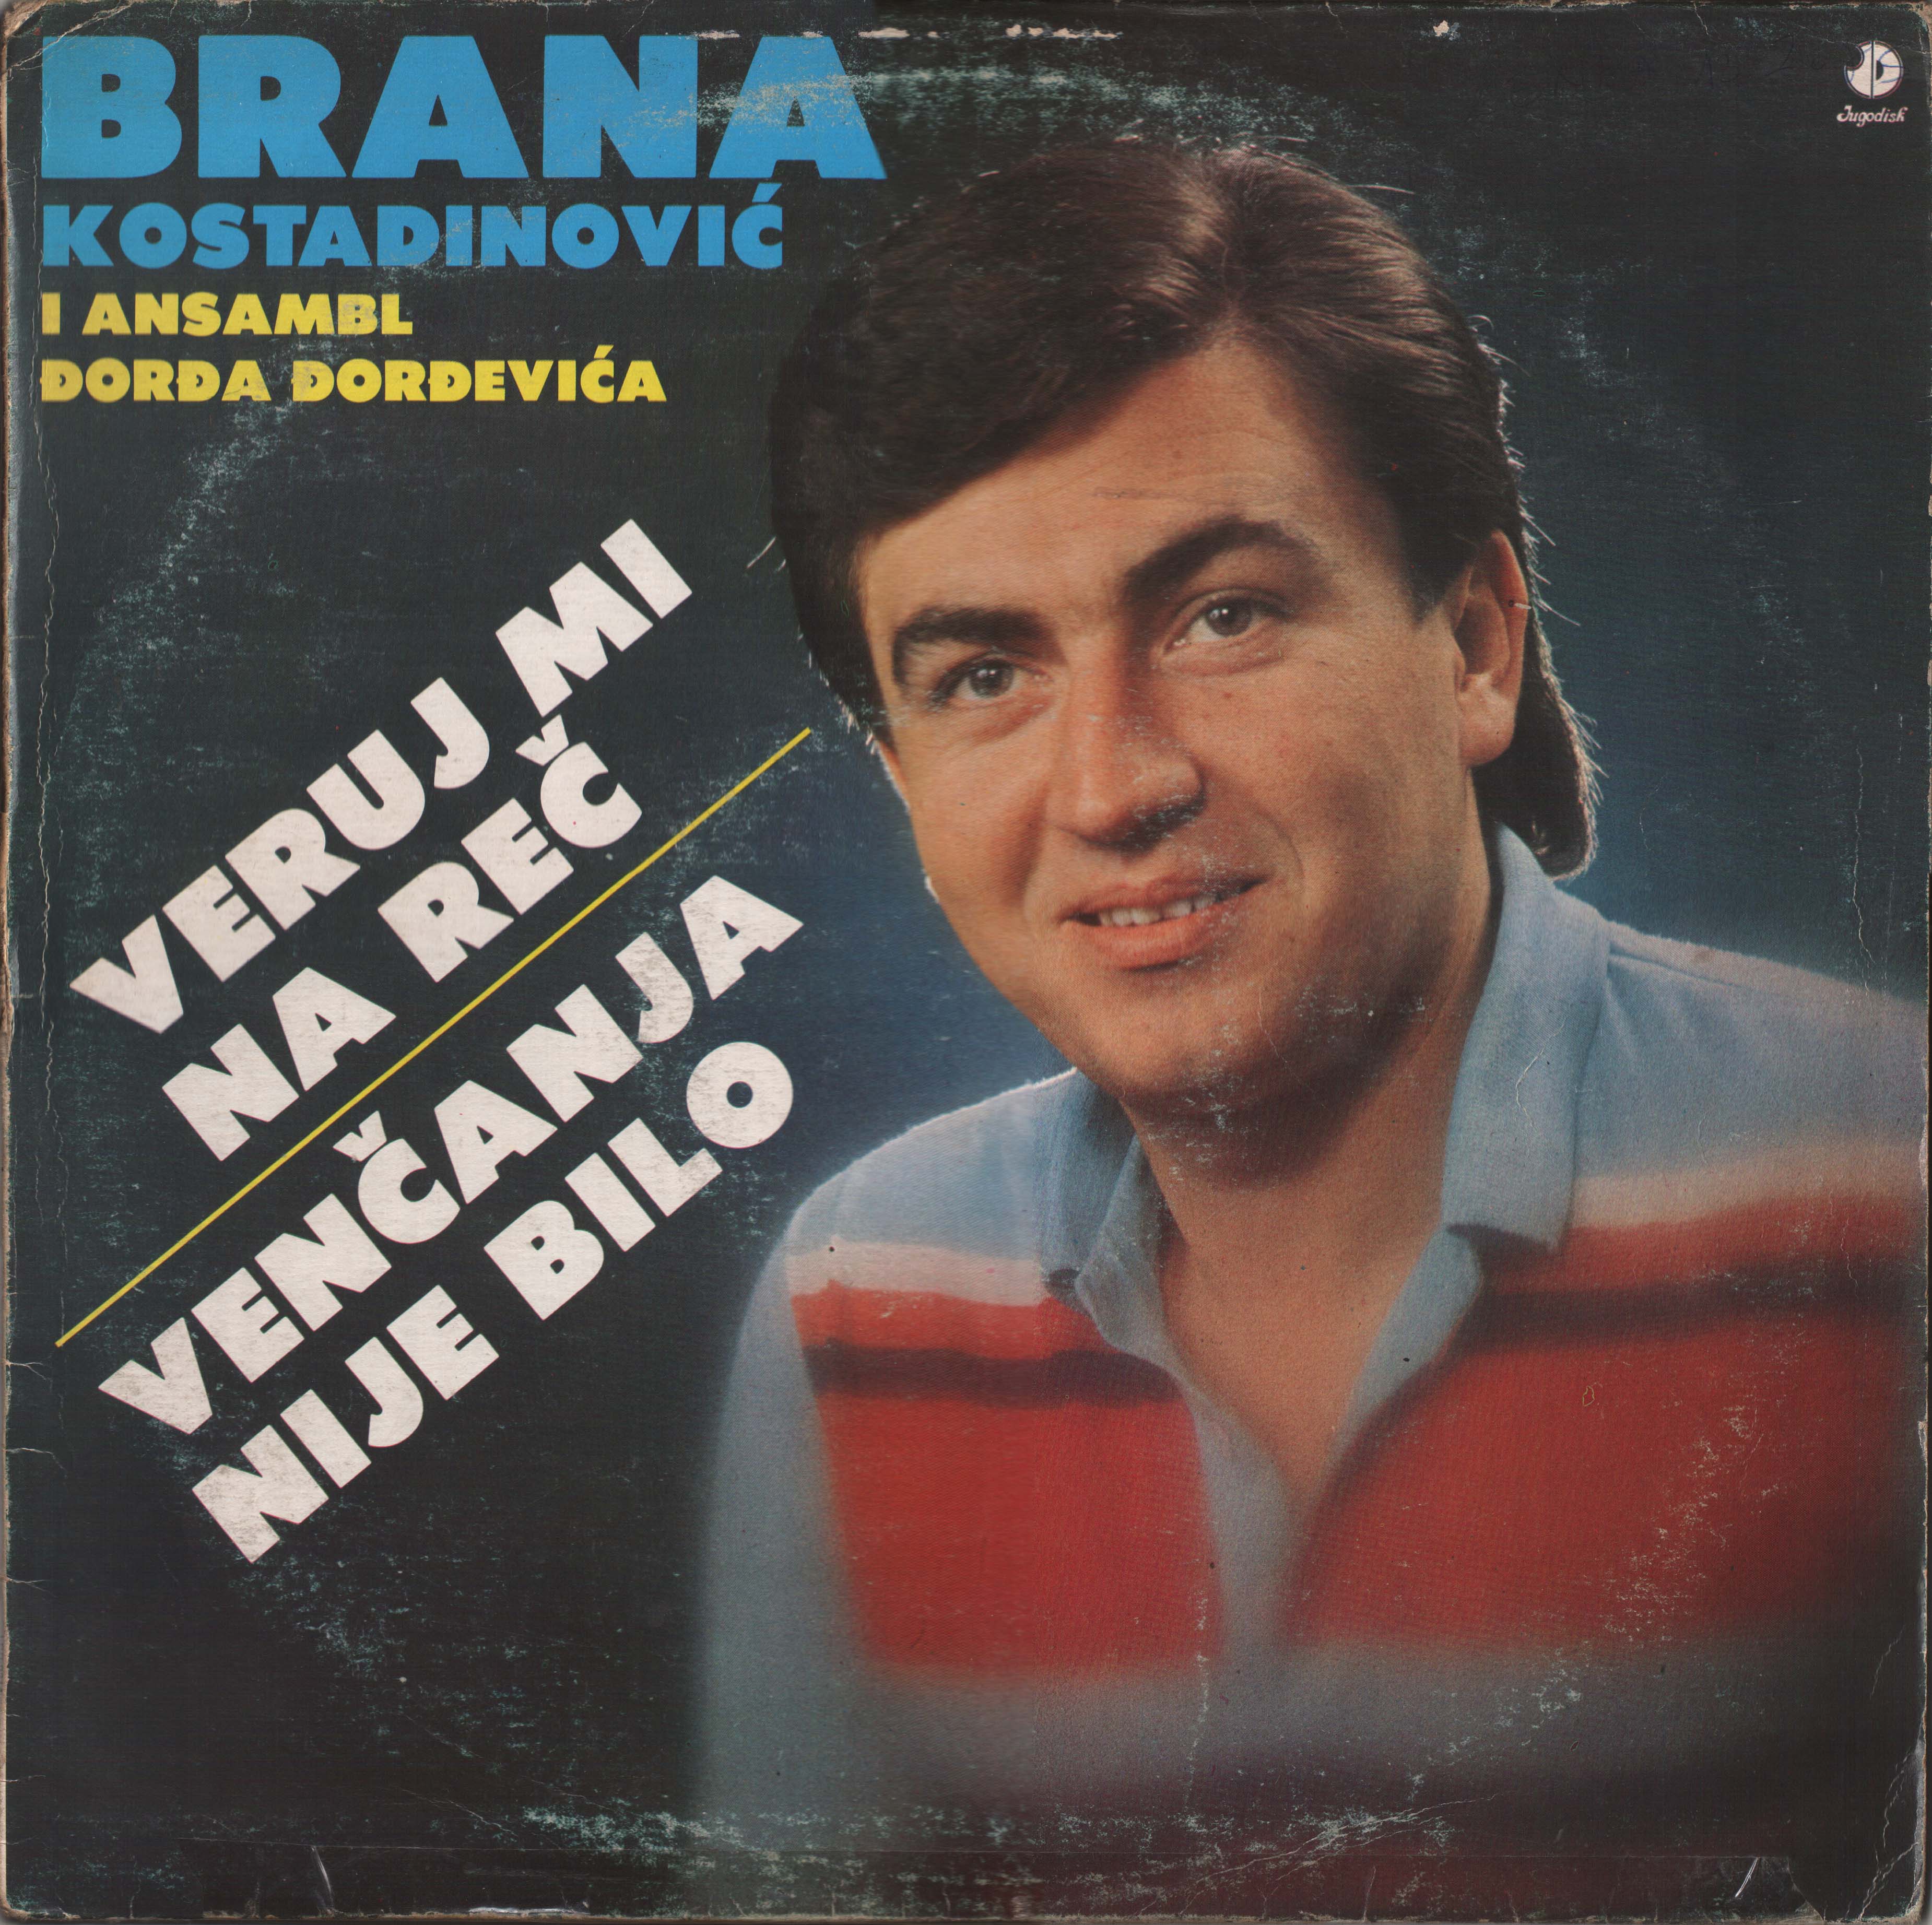 Brana Kostadinovic 1984 P